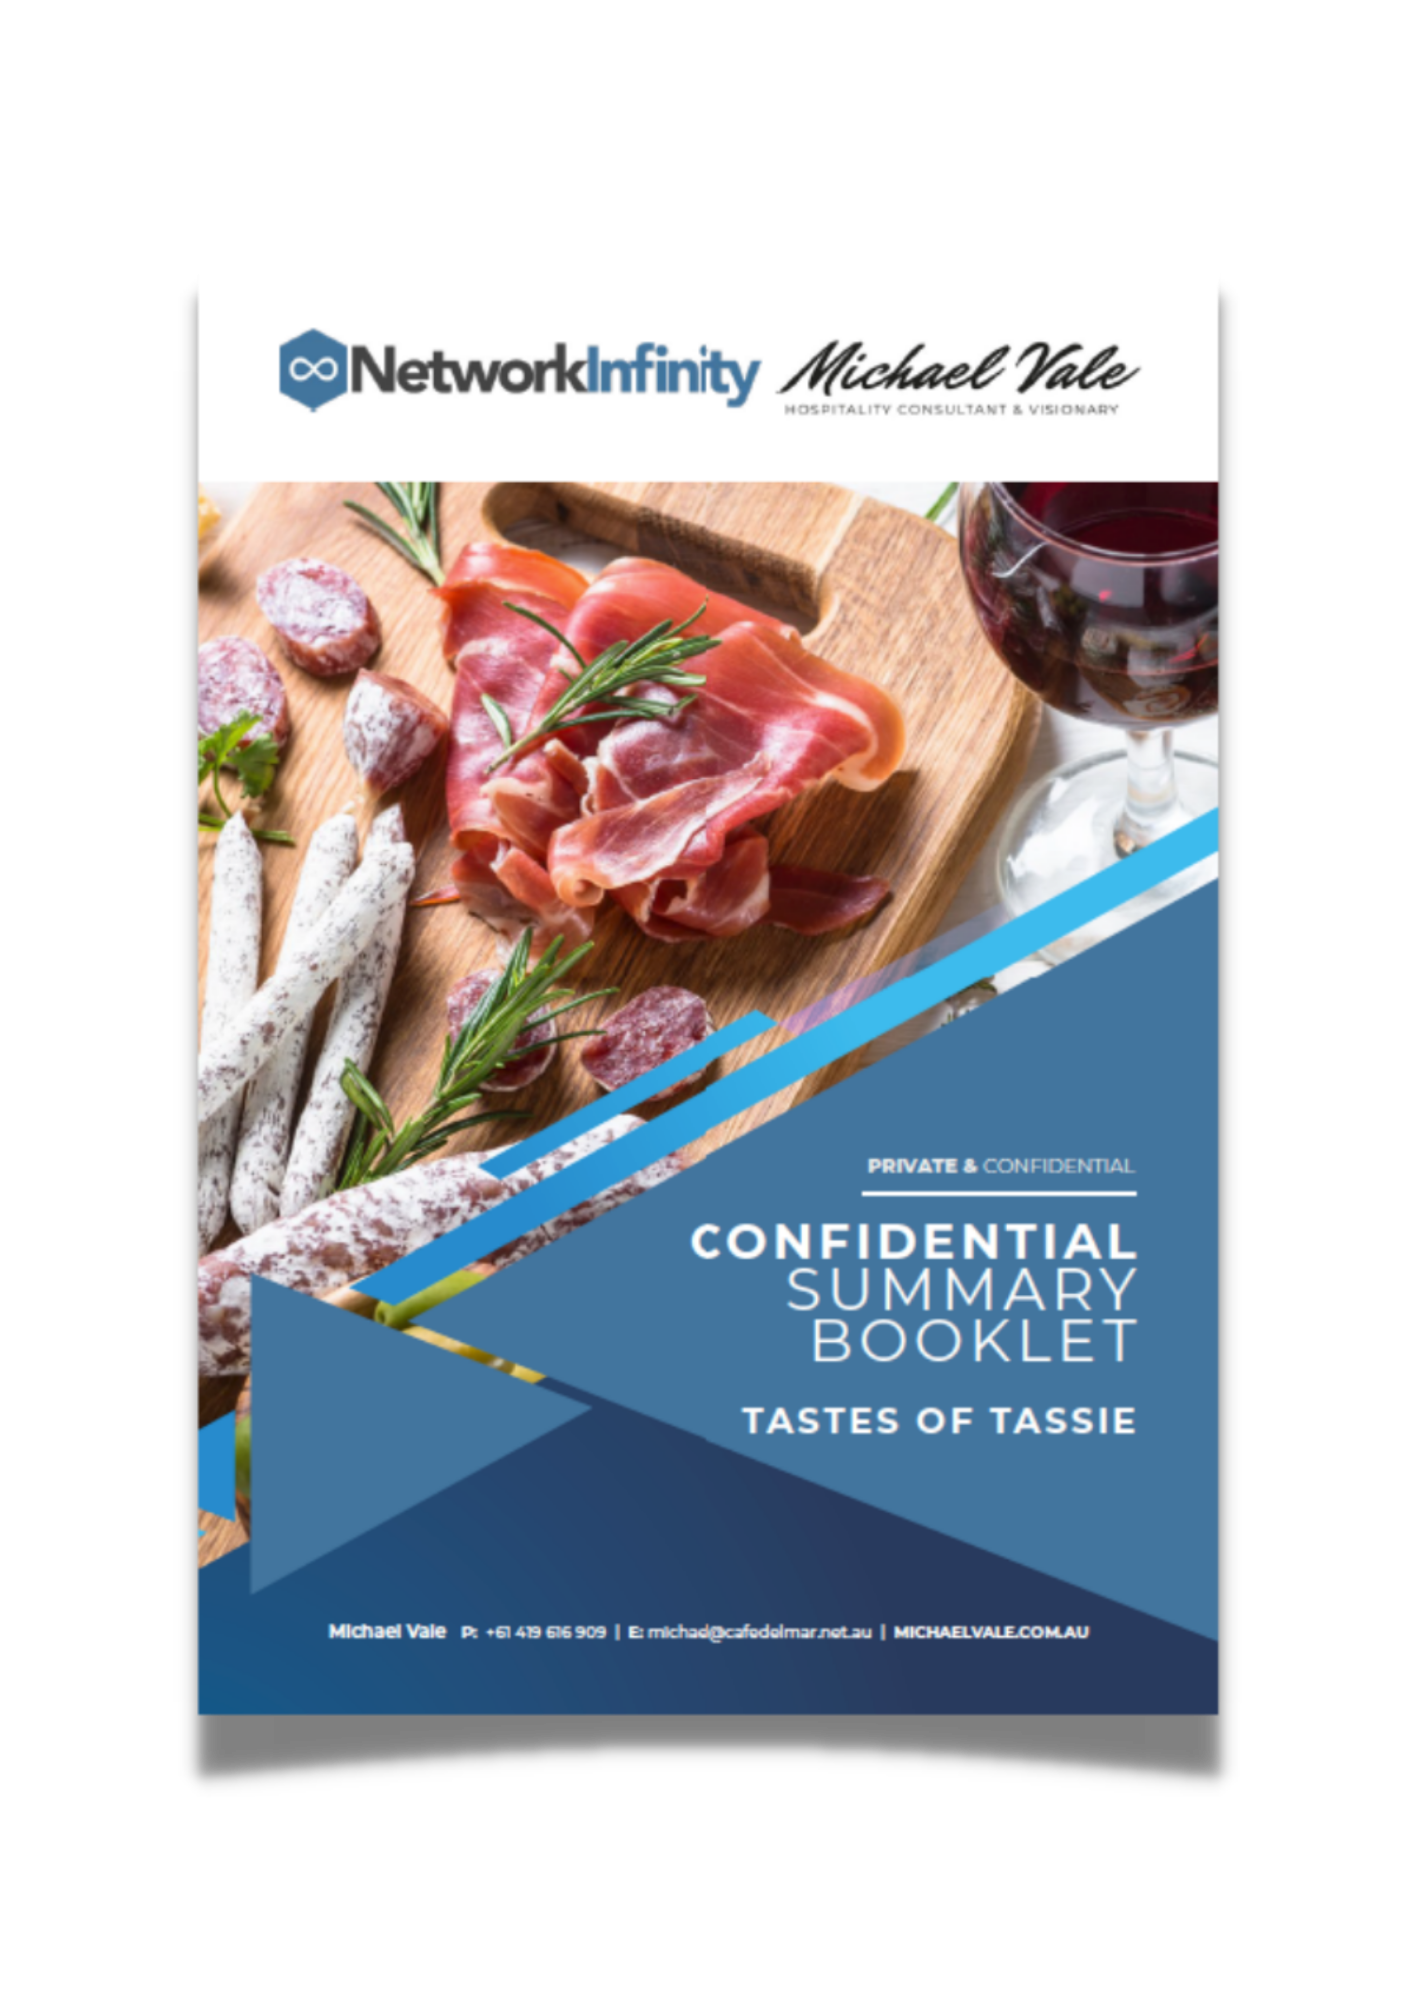 Tastes of Tassie - Confidential Summary Booklet (Medium Resolution)